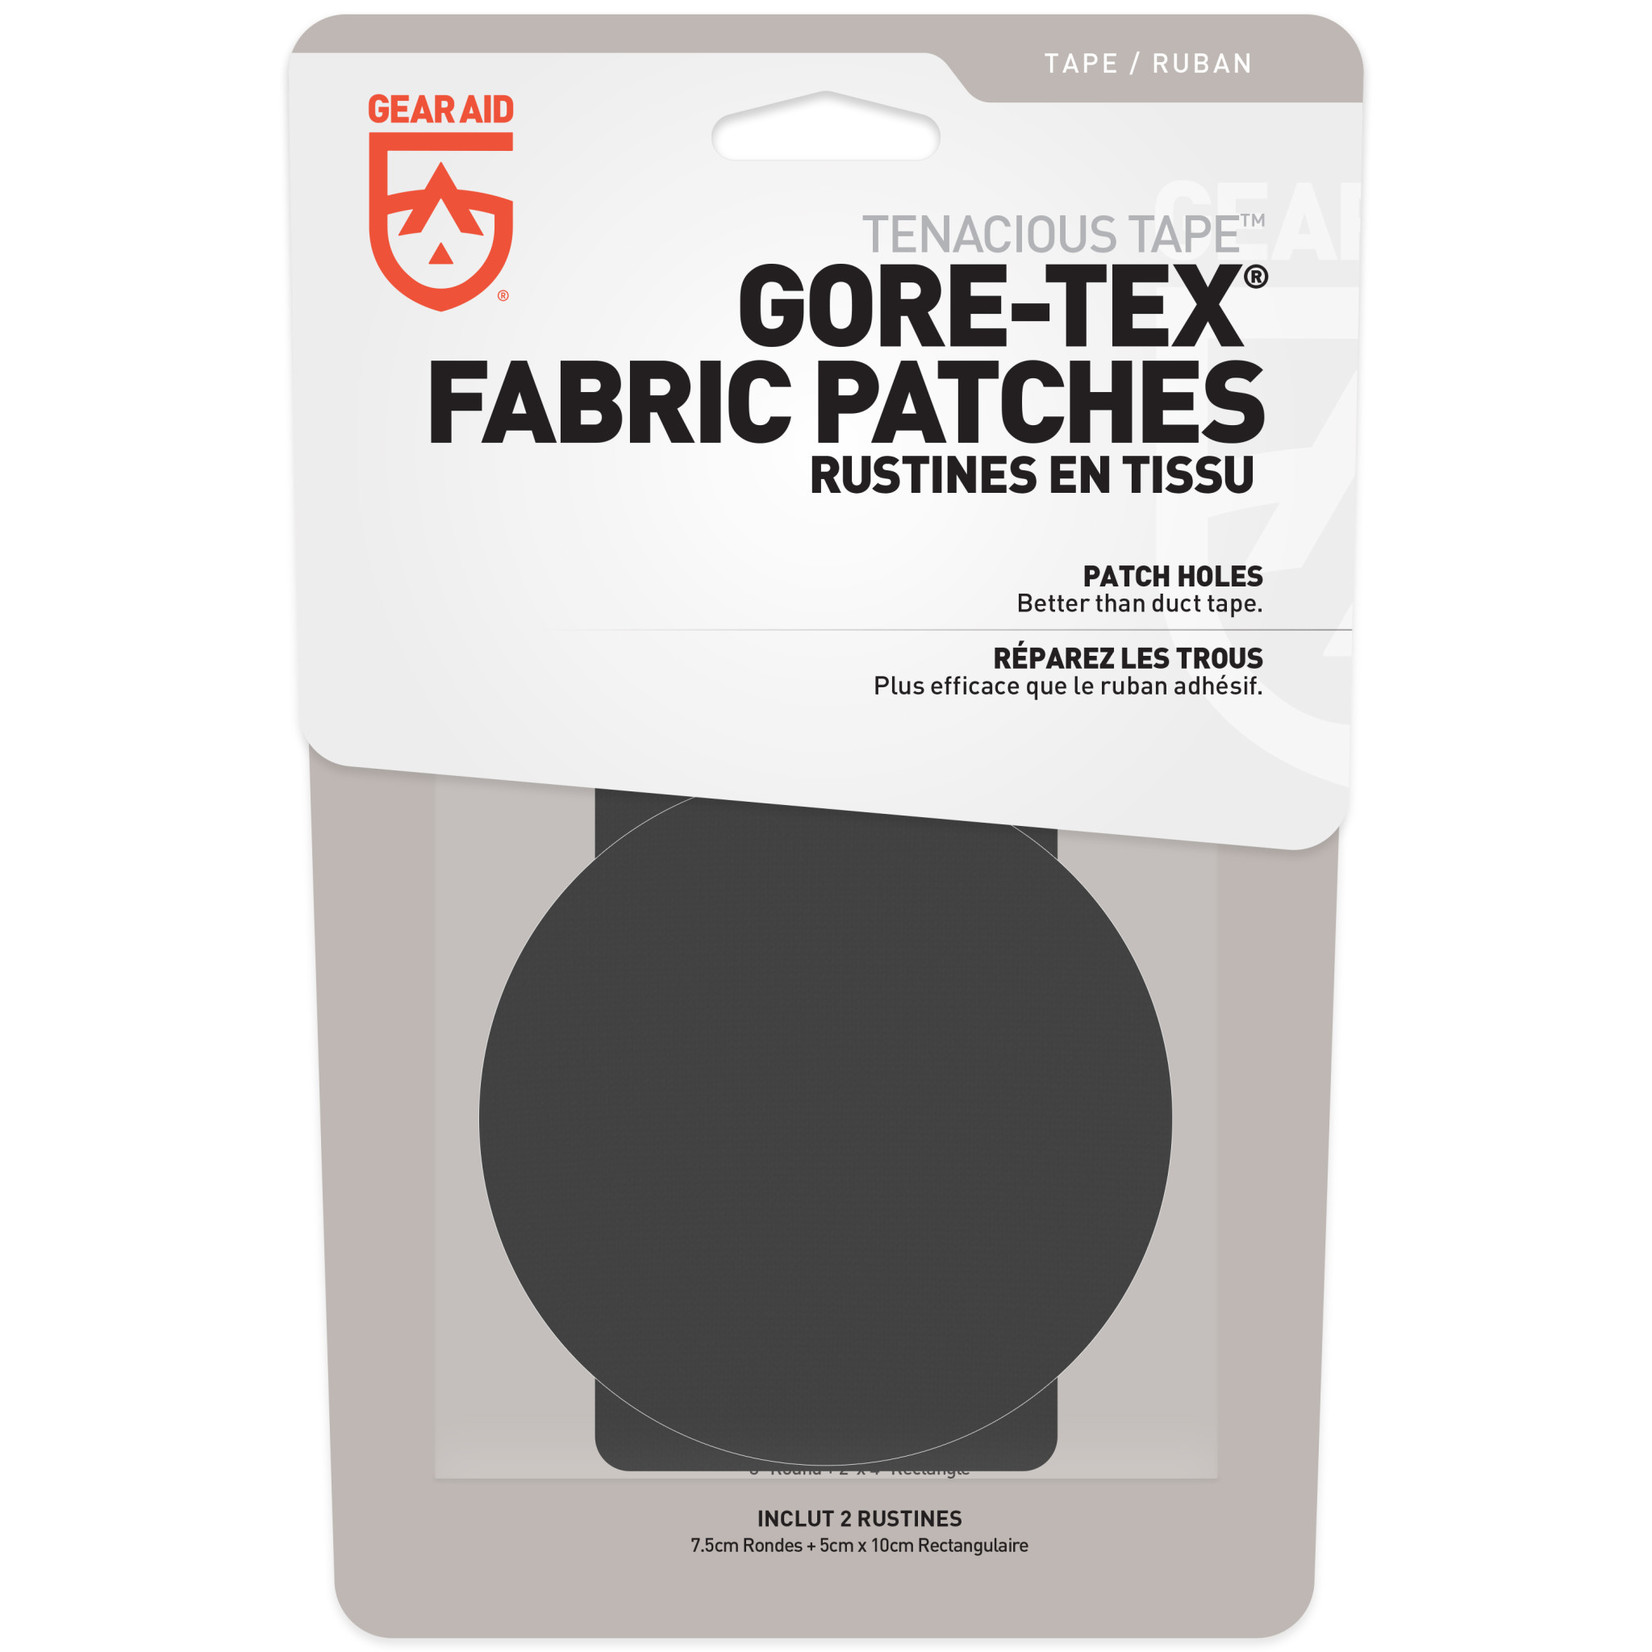 Gear Aid Tenacious Tape Goretex Fabric